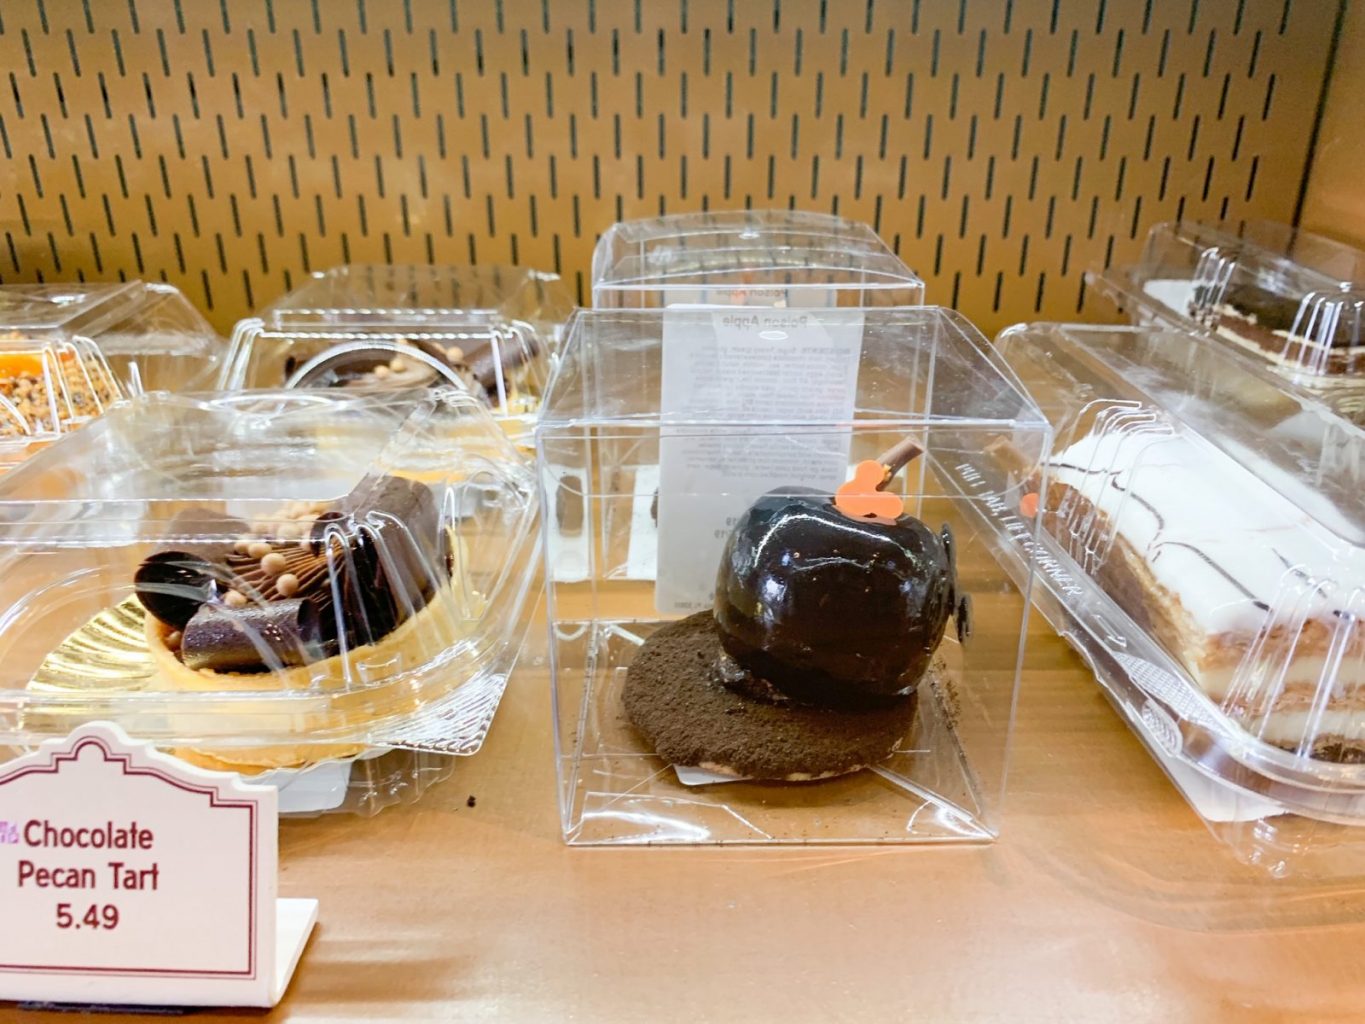 A decadent chocolate dessert pastry rests on a Starbucks shelf.